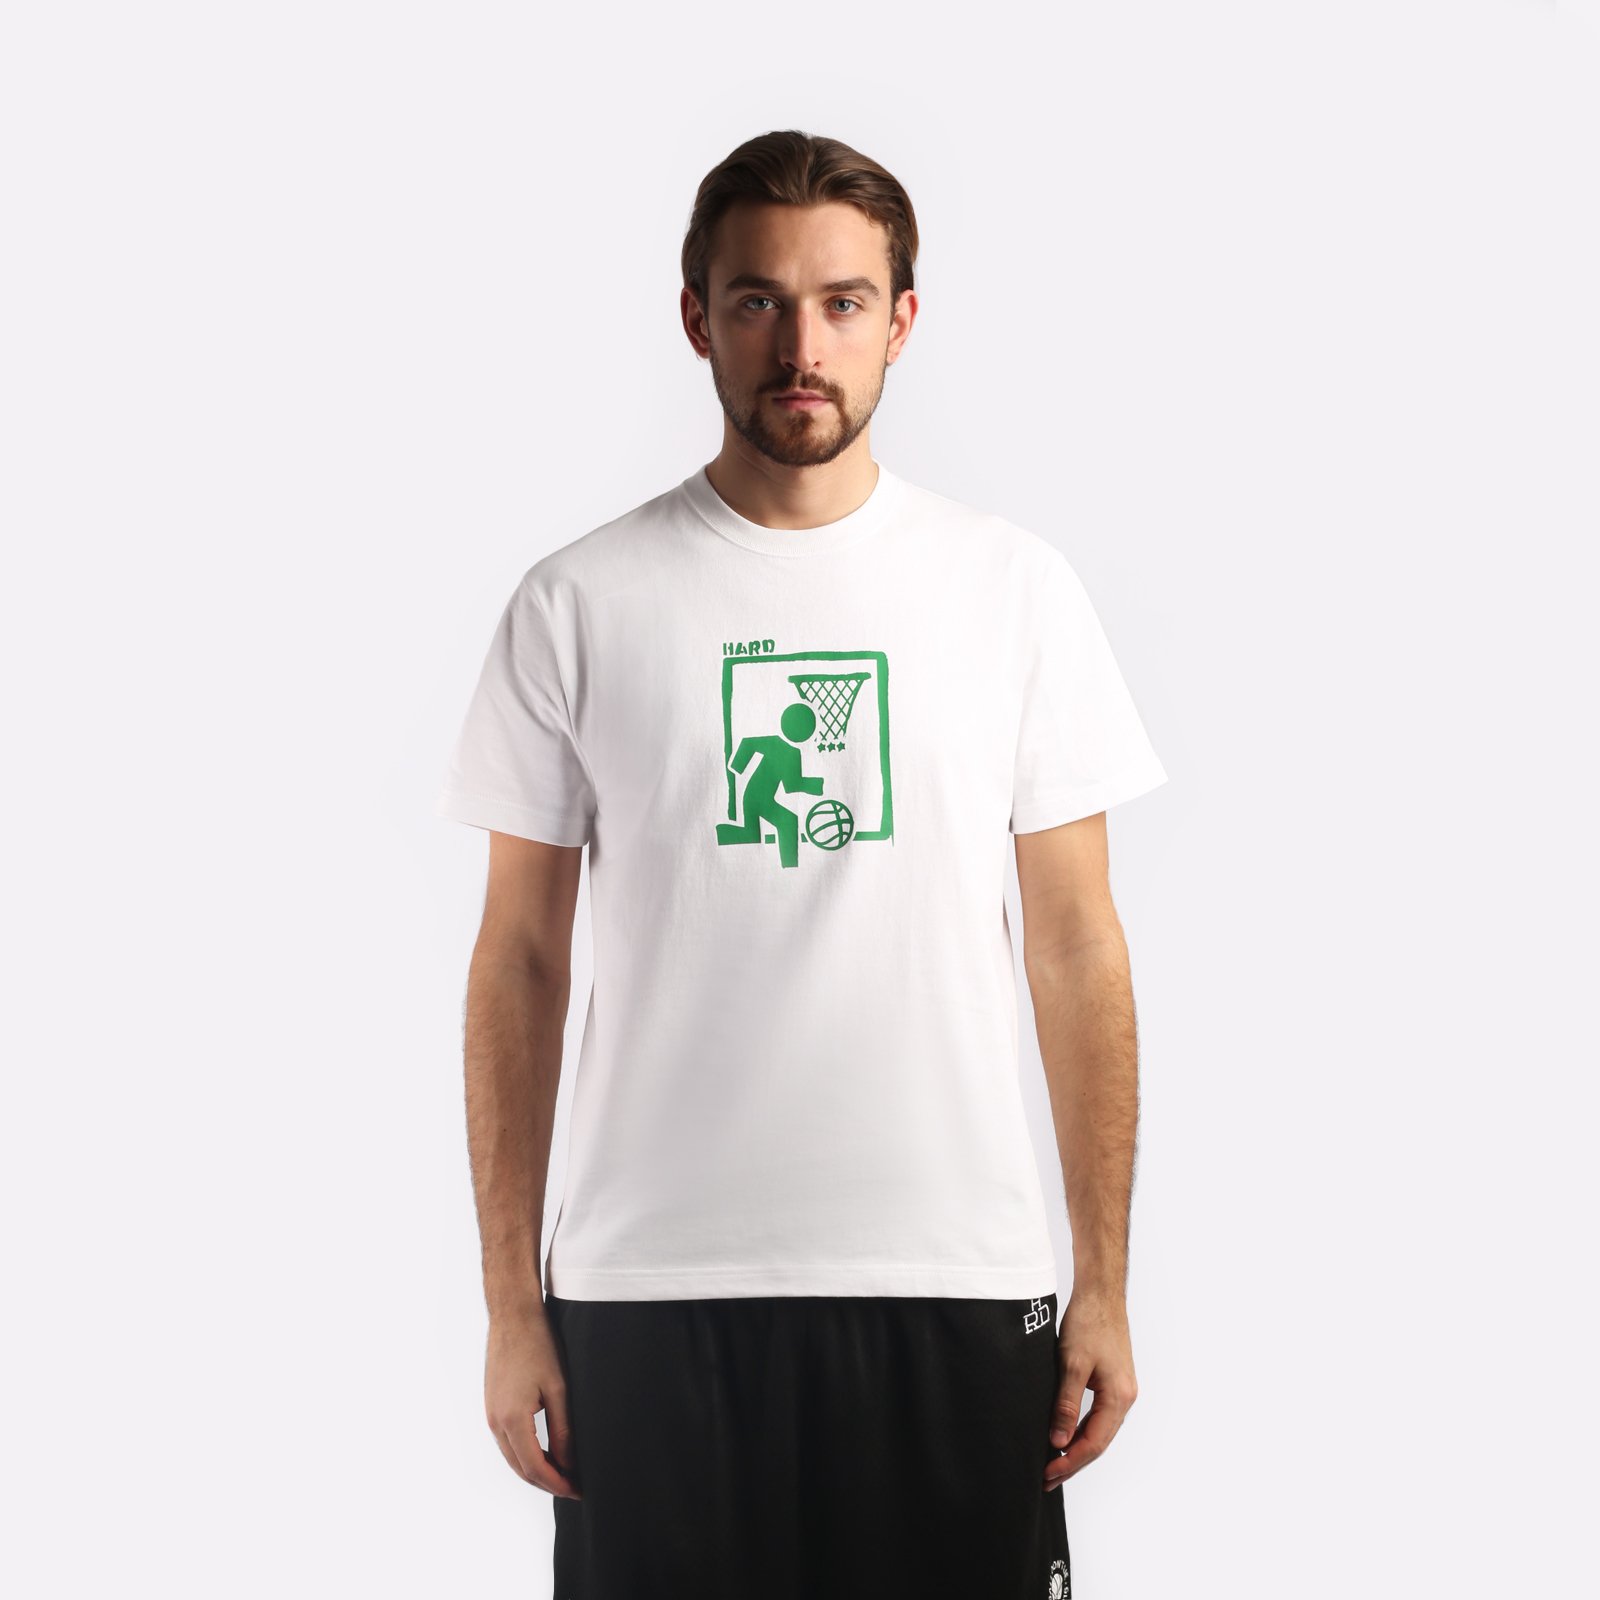 мужская футболка Hard Simple Tee  (Hrdtee-white)  - цена, описание, фото 1